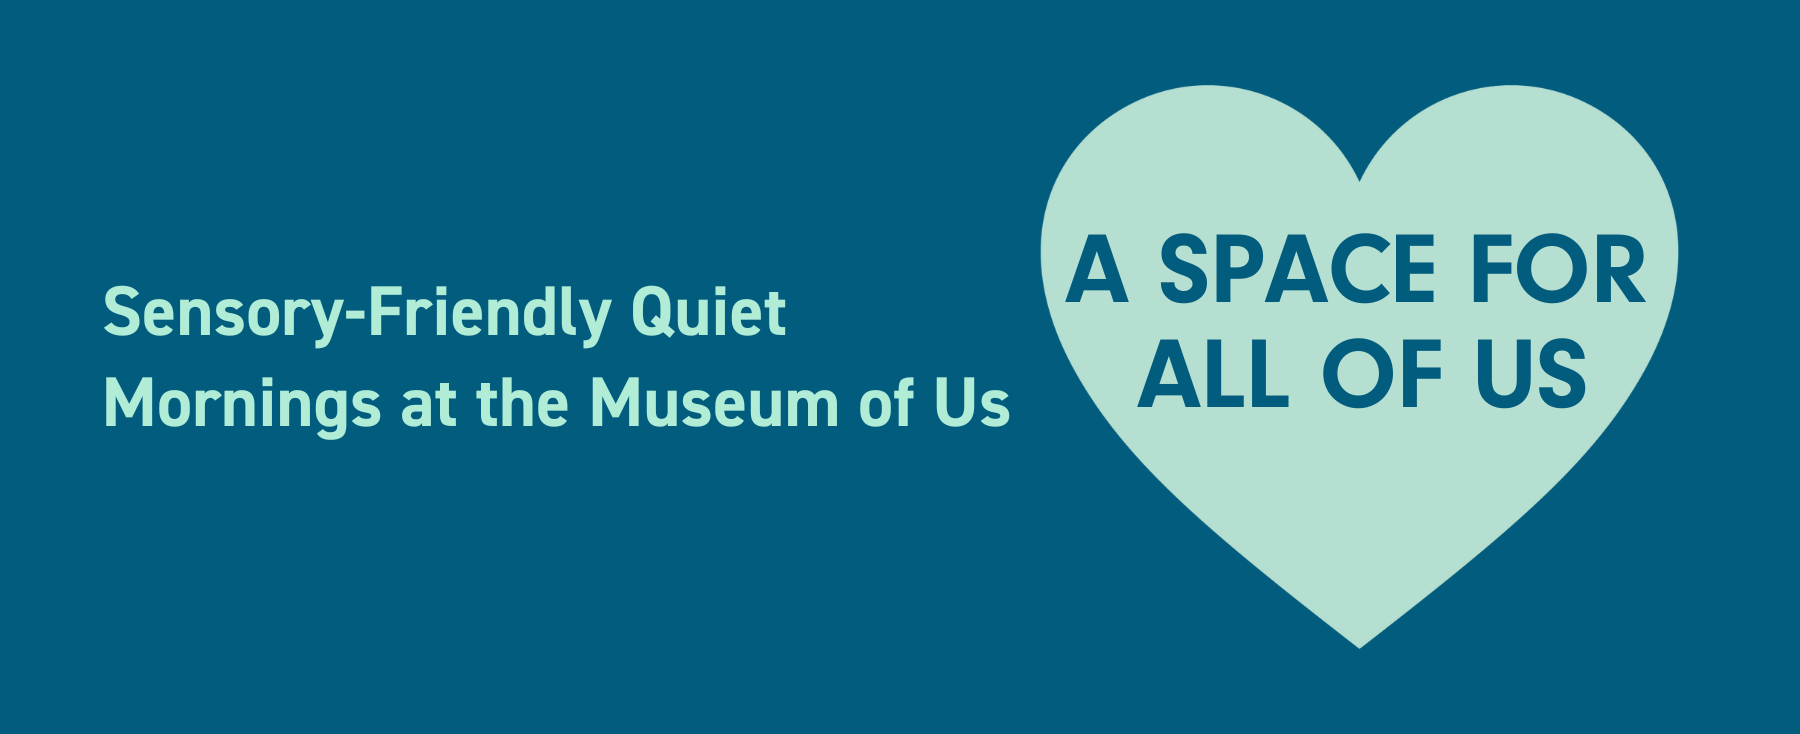 Sensory-friendly quiet mornings at the museum of us written in light blue on a dark blue background; a space for all of us written in dark blue in a light blue heart